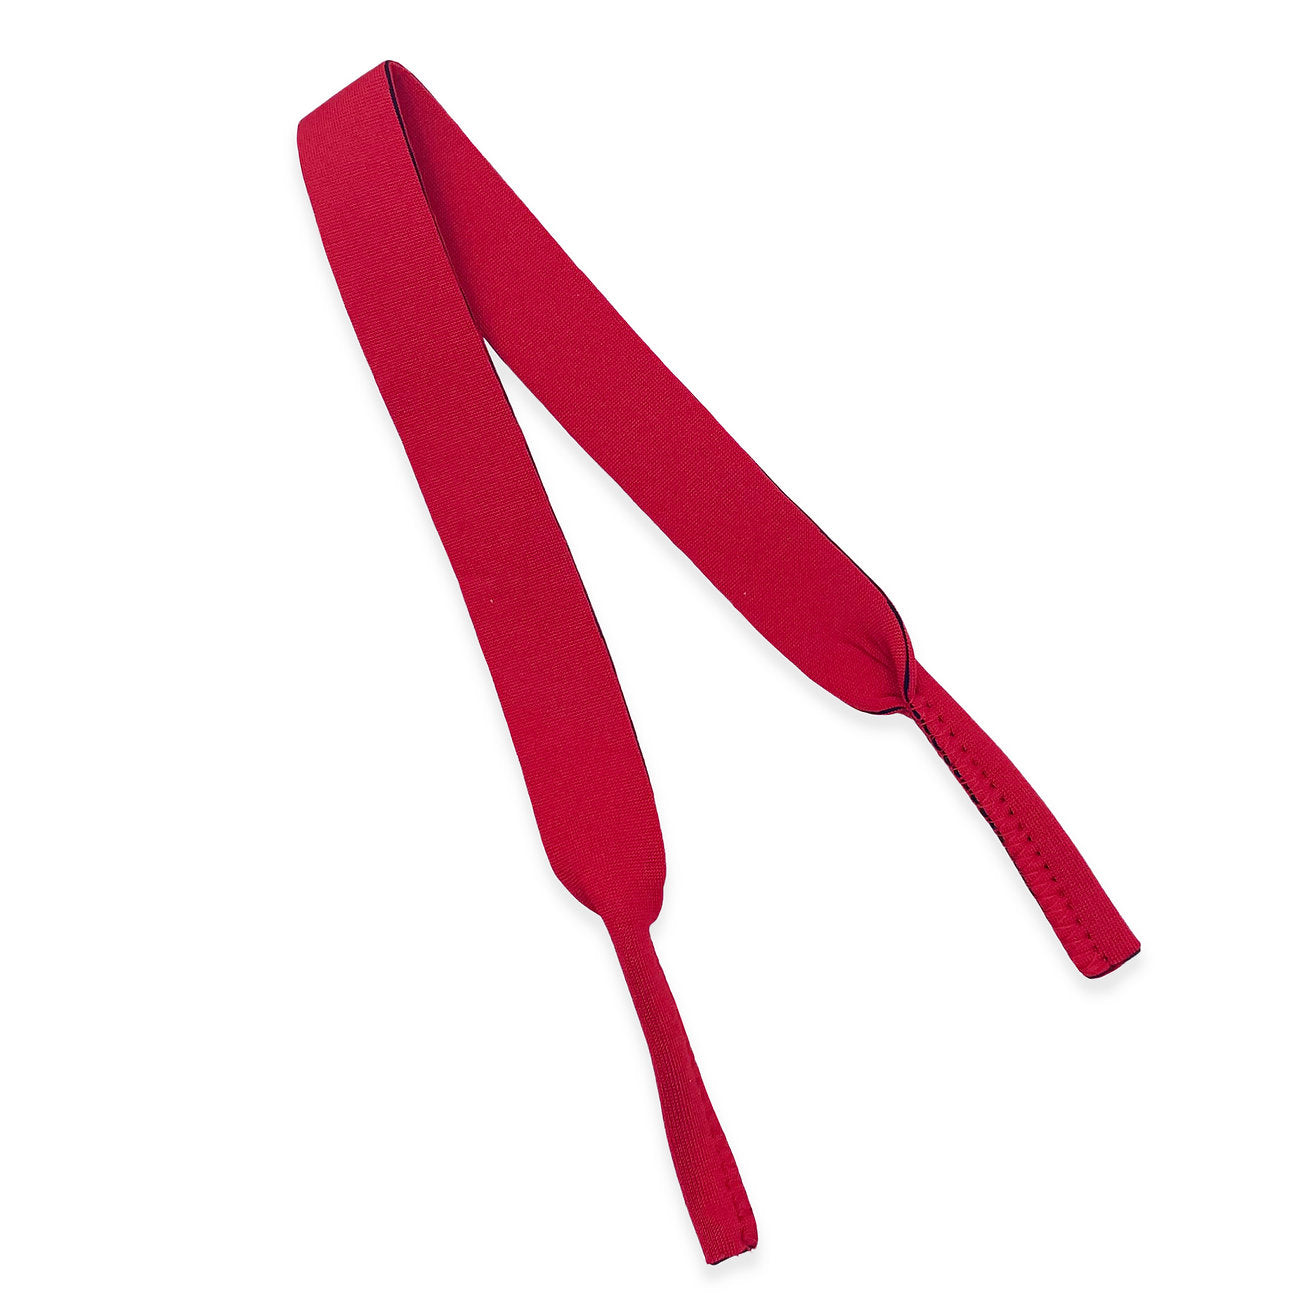 Red wide nylon sports cord for sunglasses